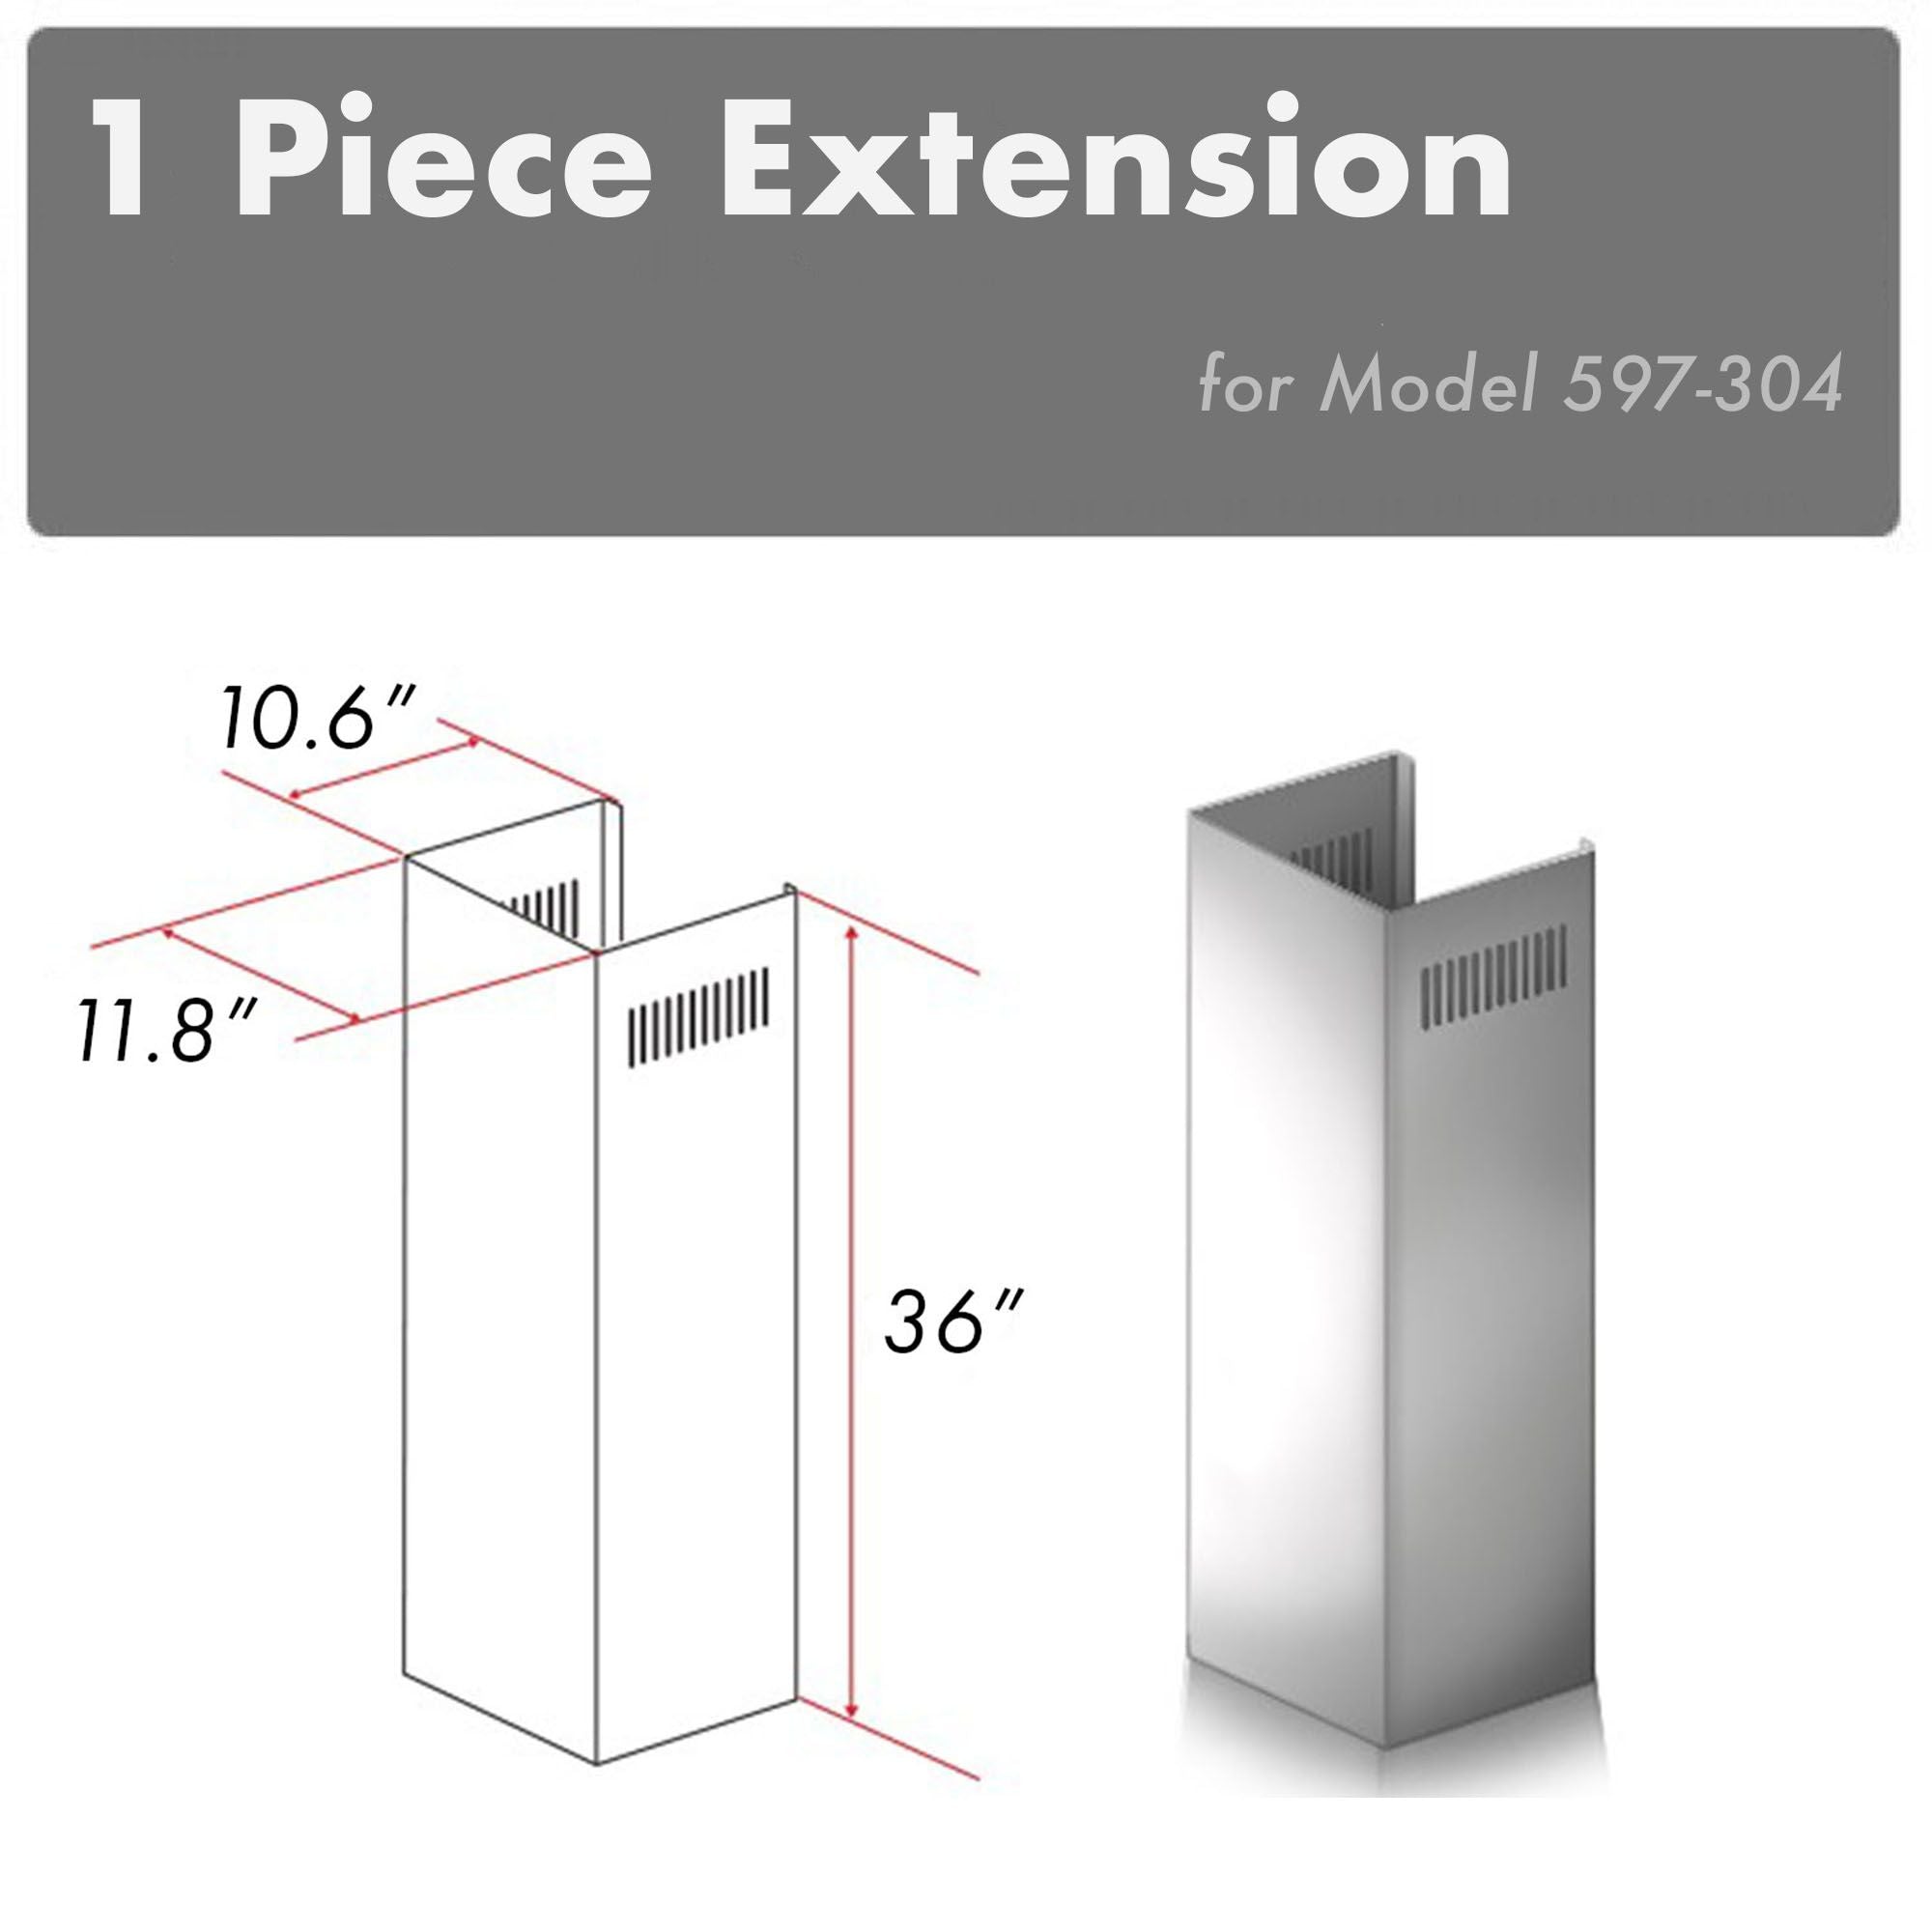 ZLINE 1-36" Chimney Extension for 9 ft. to 10 ft. Ceilings (1PCEXT-597-304) - Rustic Kitchen & Bath - Range Hood Accessories - ZLINE Kitchen and Bath